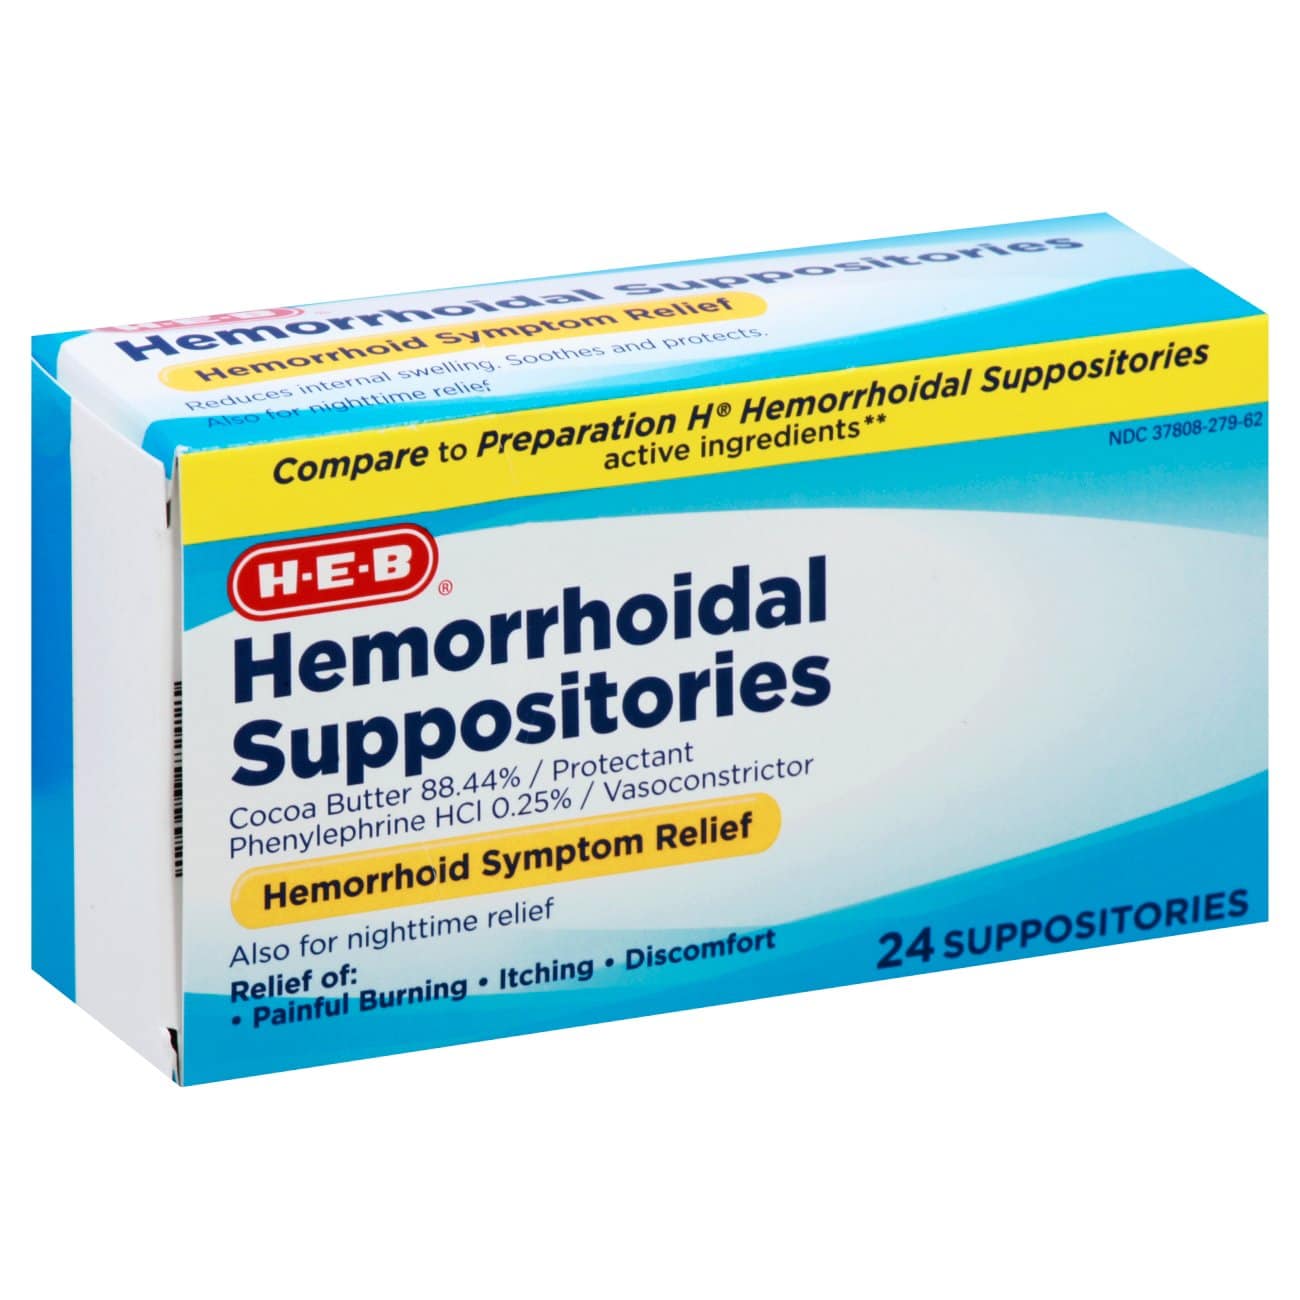 Do Suppositories Help Heal Hemorrhoids